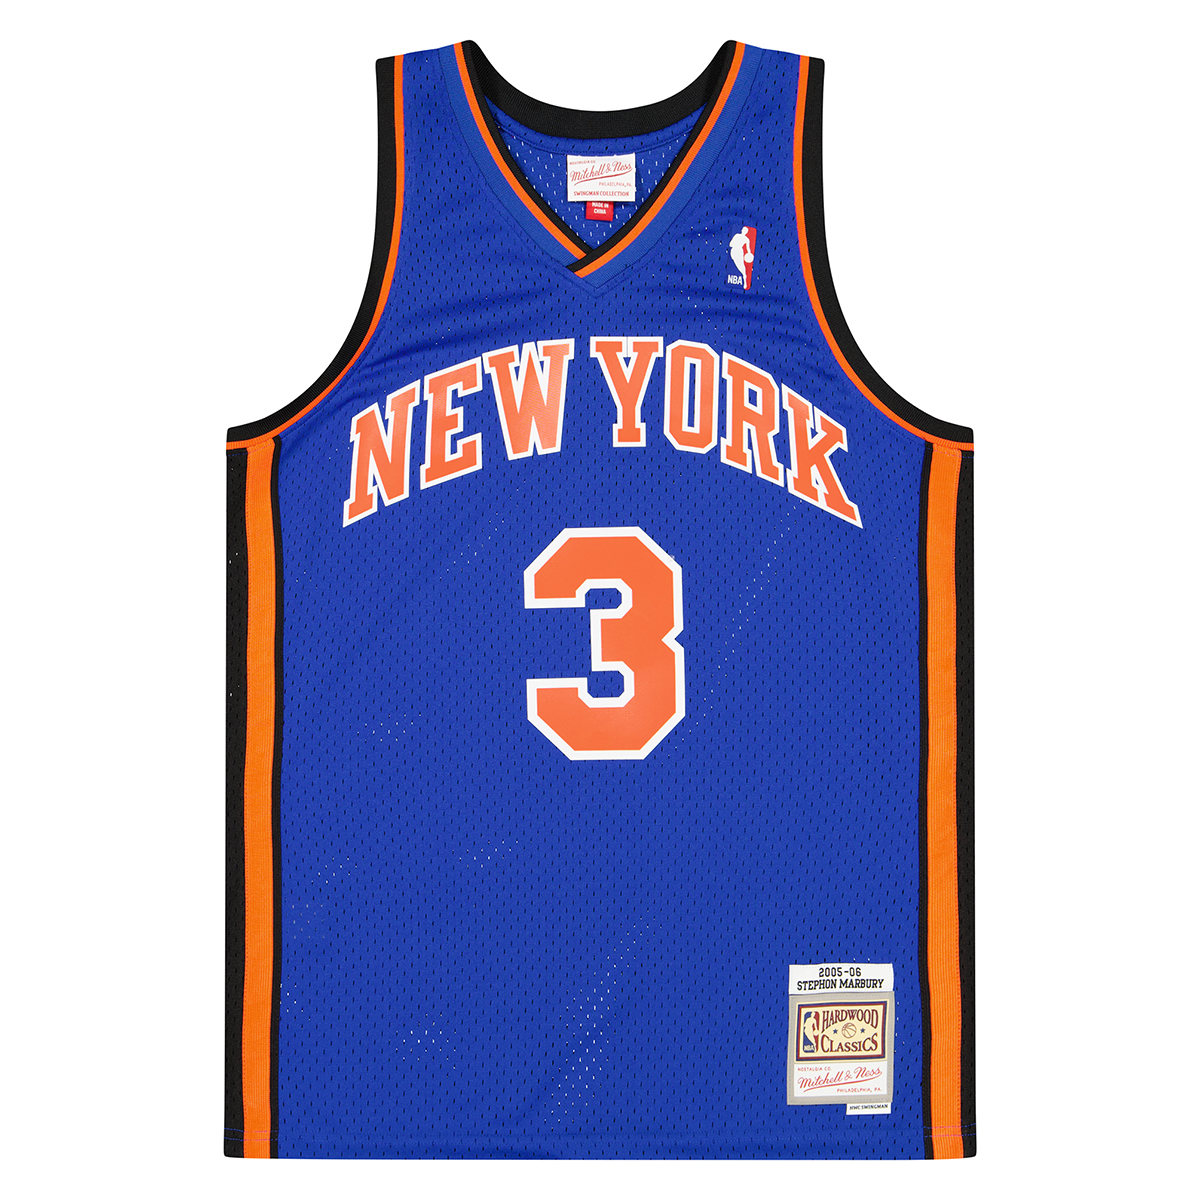 Buy NBA SWINGMAN JERSEY NEW YORK KNICKS 05-06 - STEPHON MARBURY for EUR ...